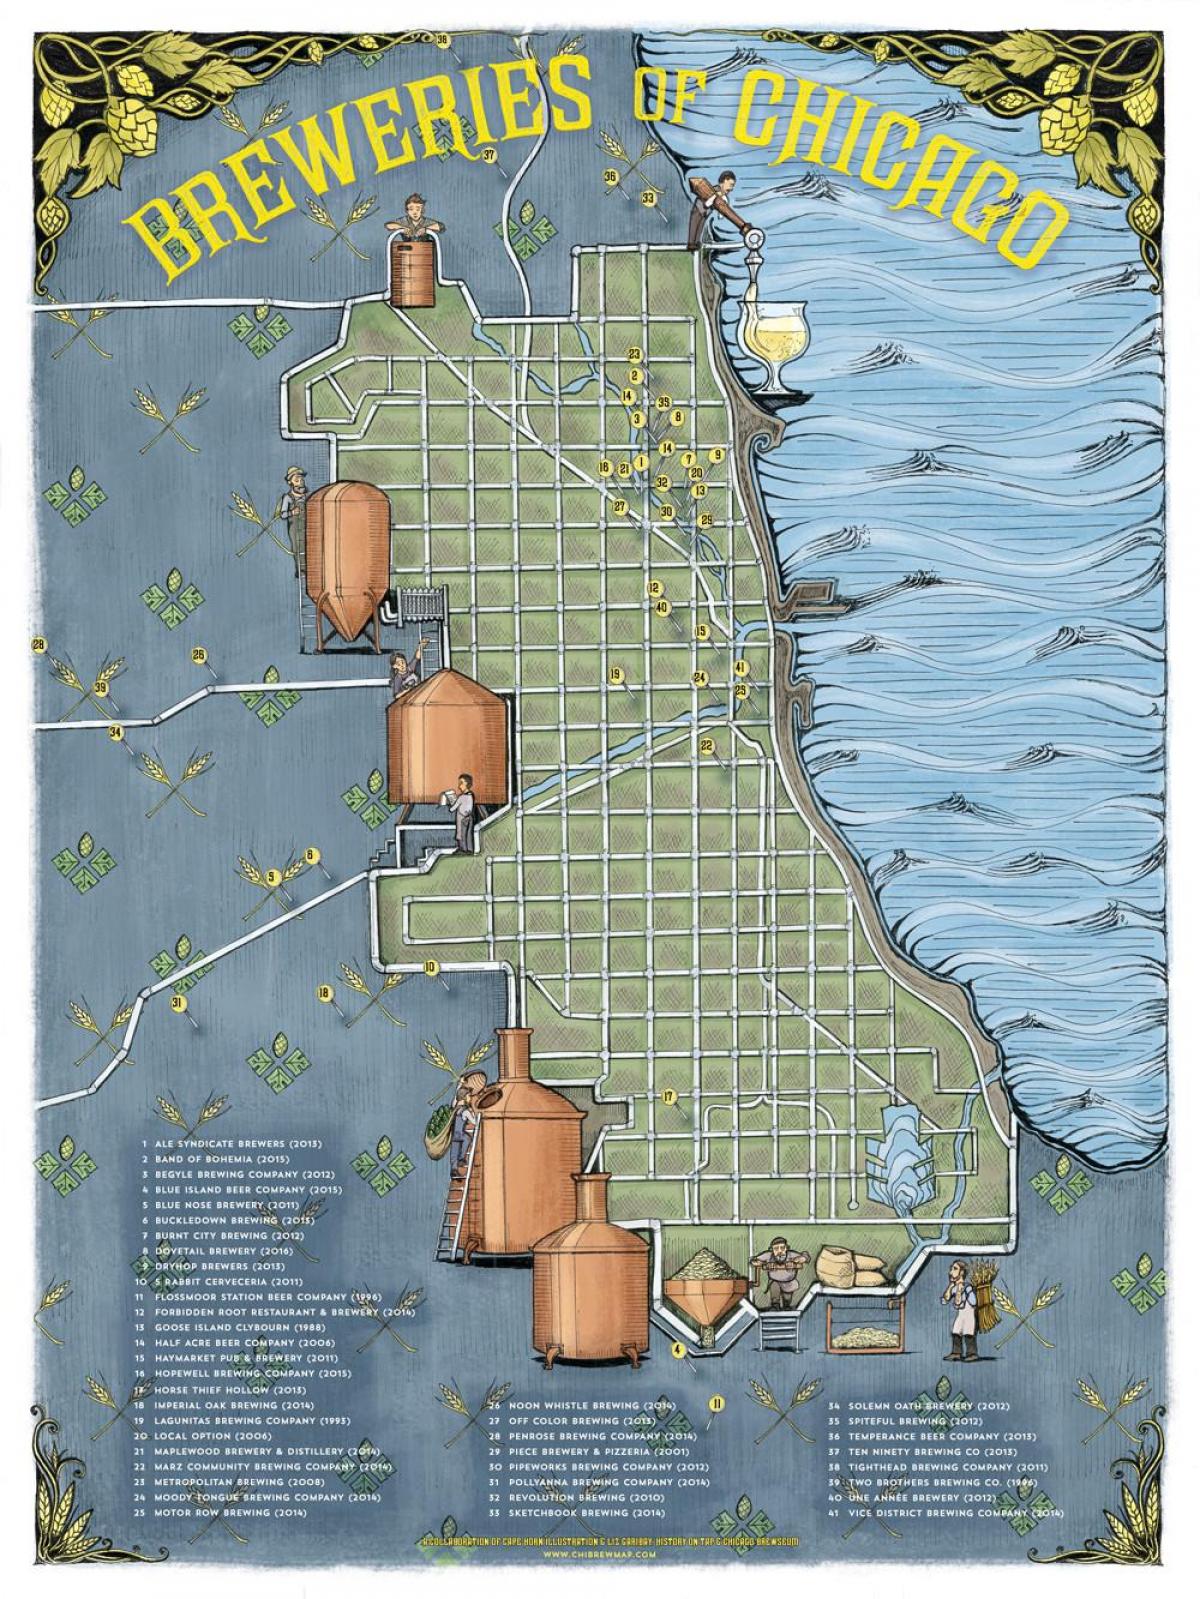 Chicago bir peta